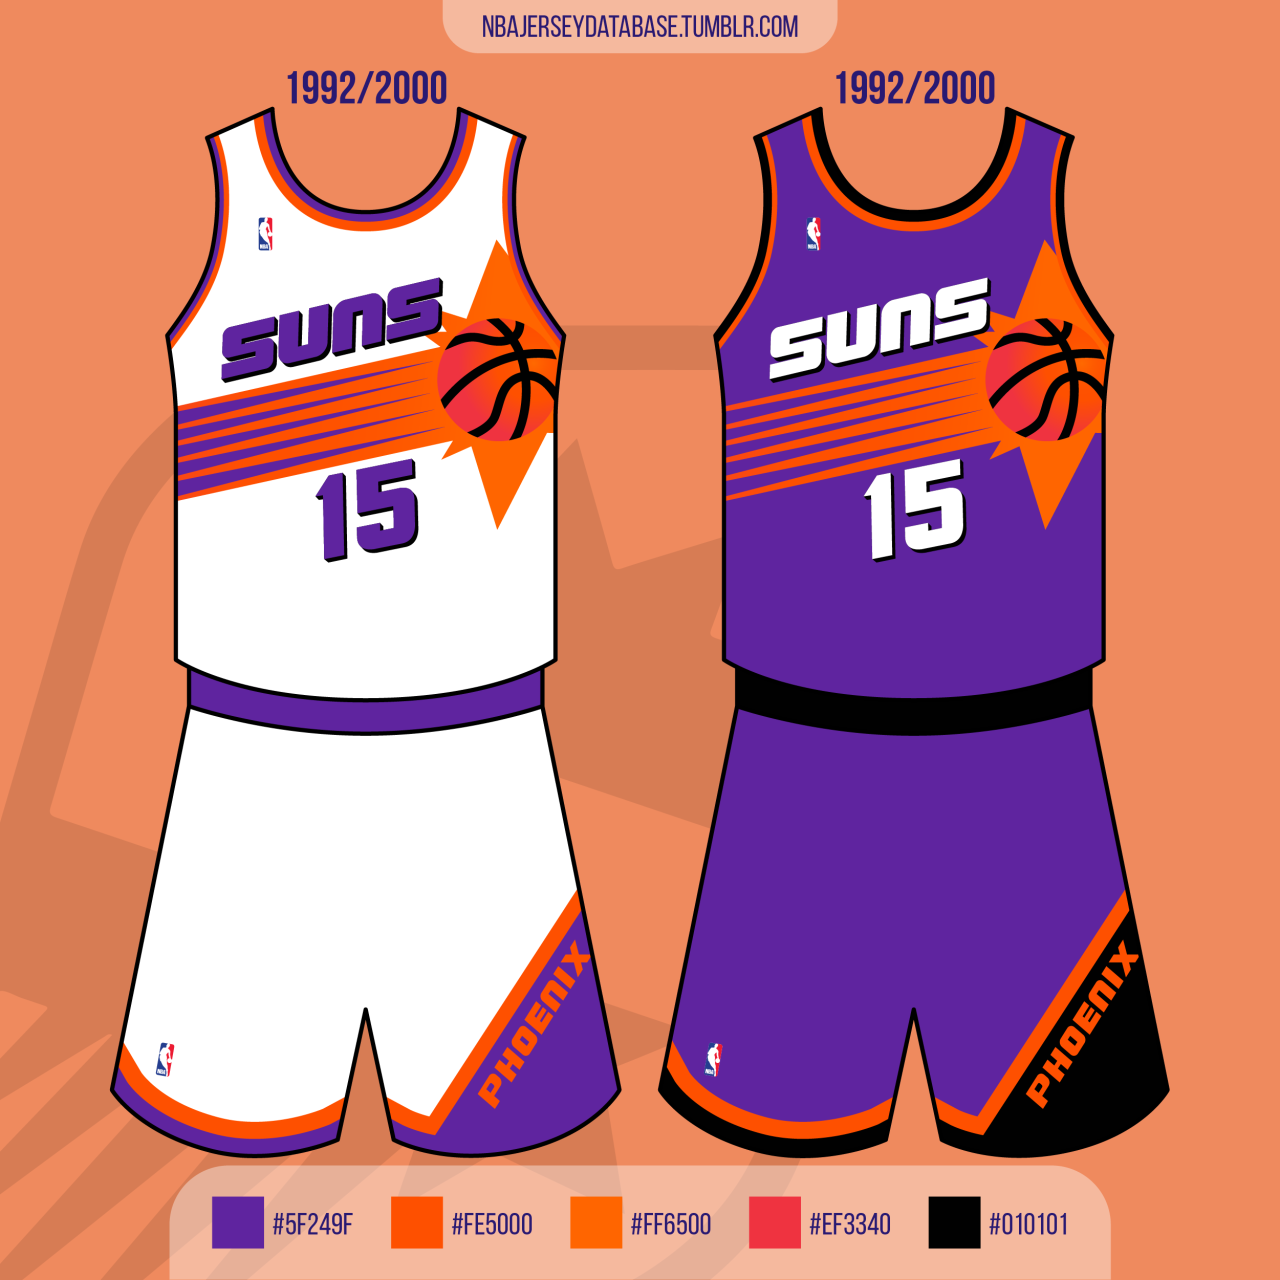 Suns throwback to 1992-93 Finals team with 'Sunburst' uniforms